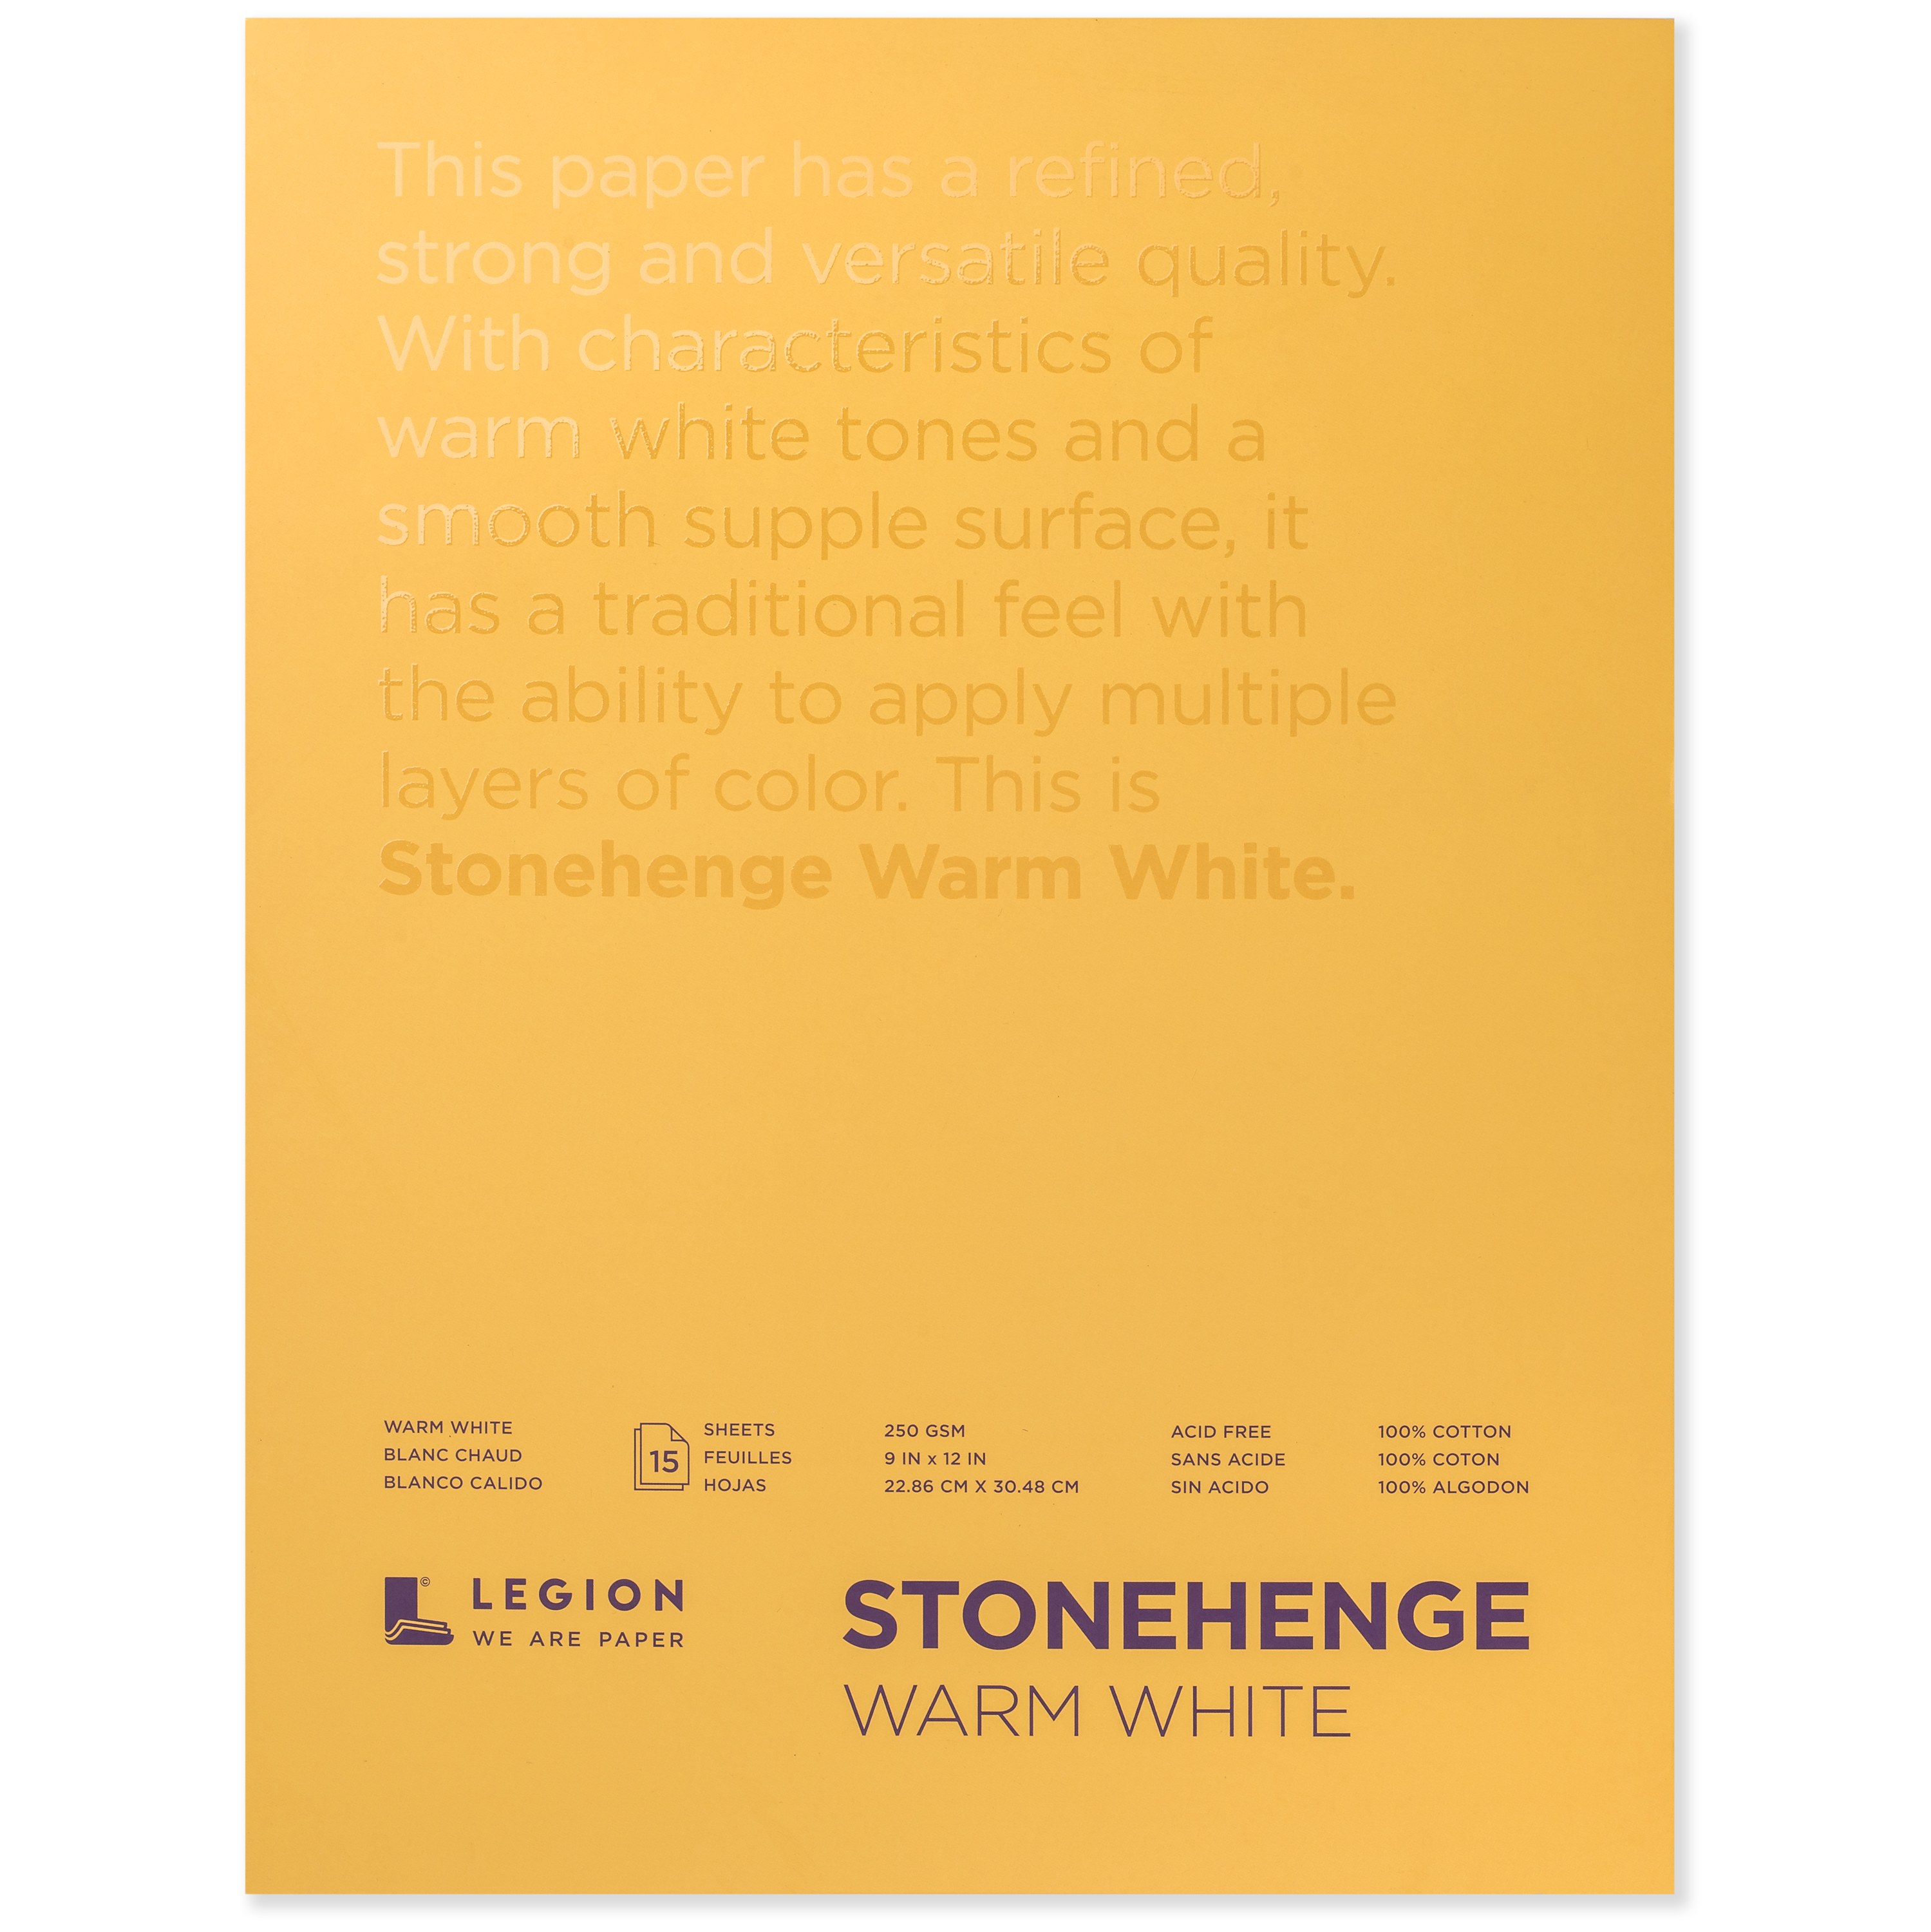 Stonehenge Warm White